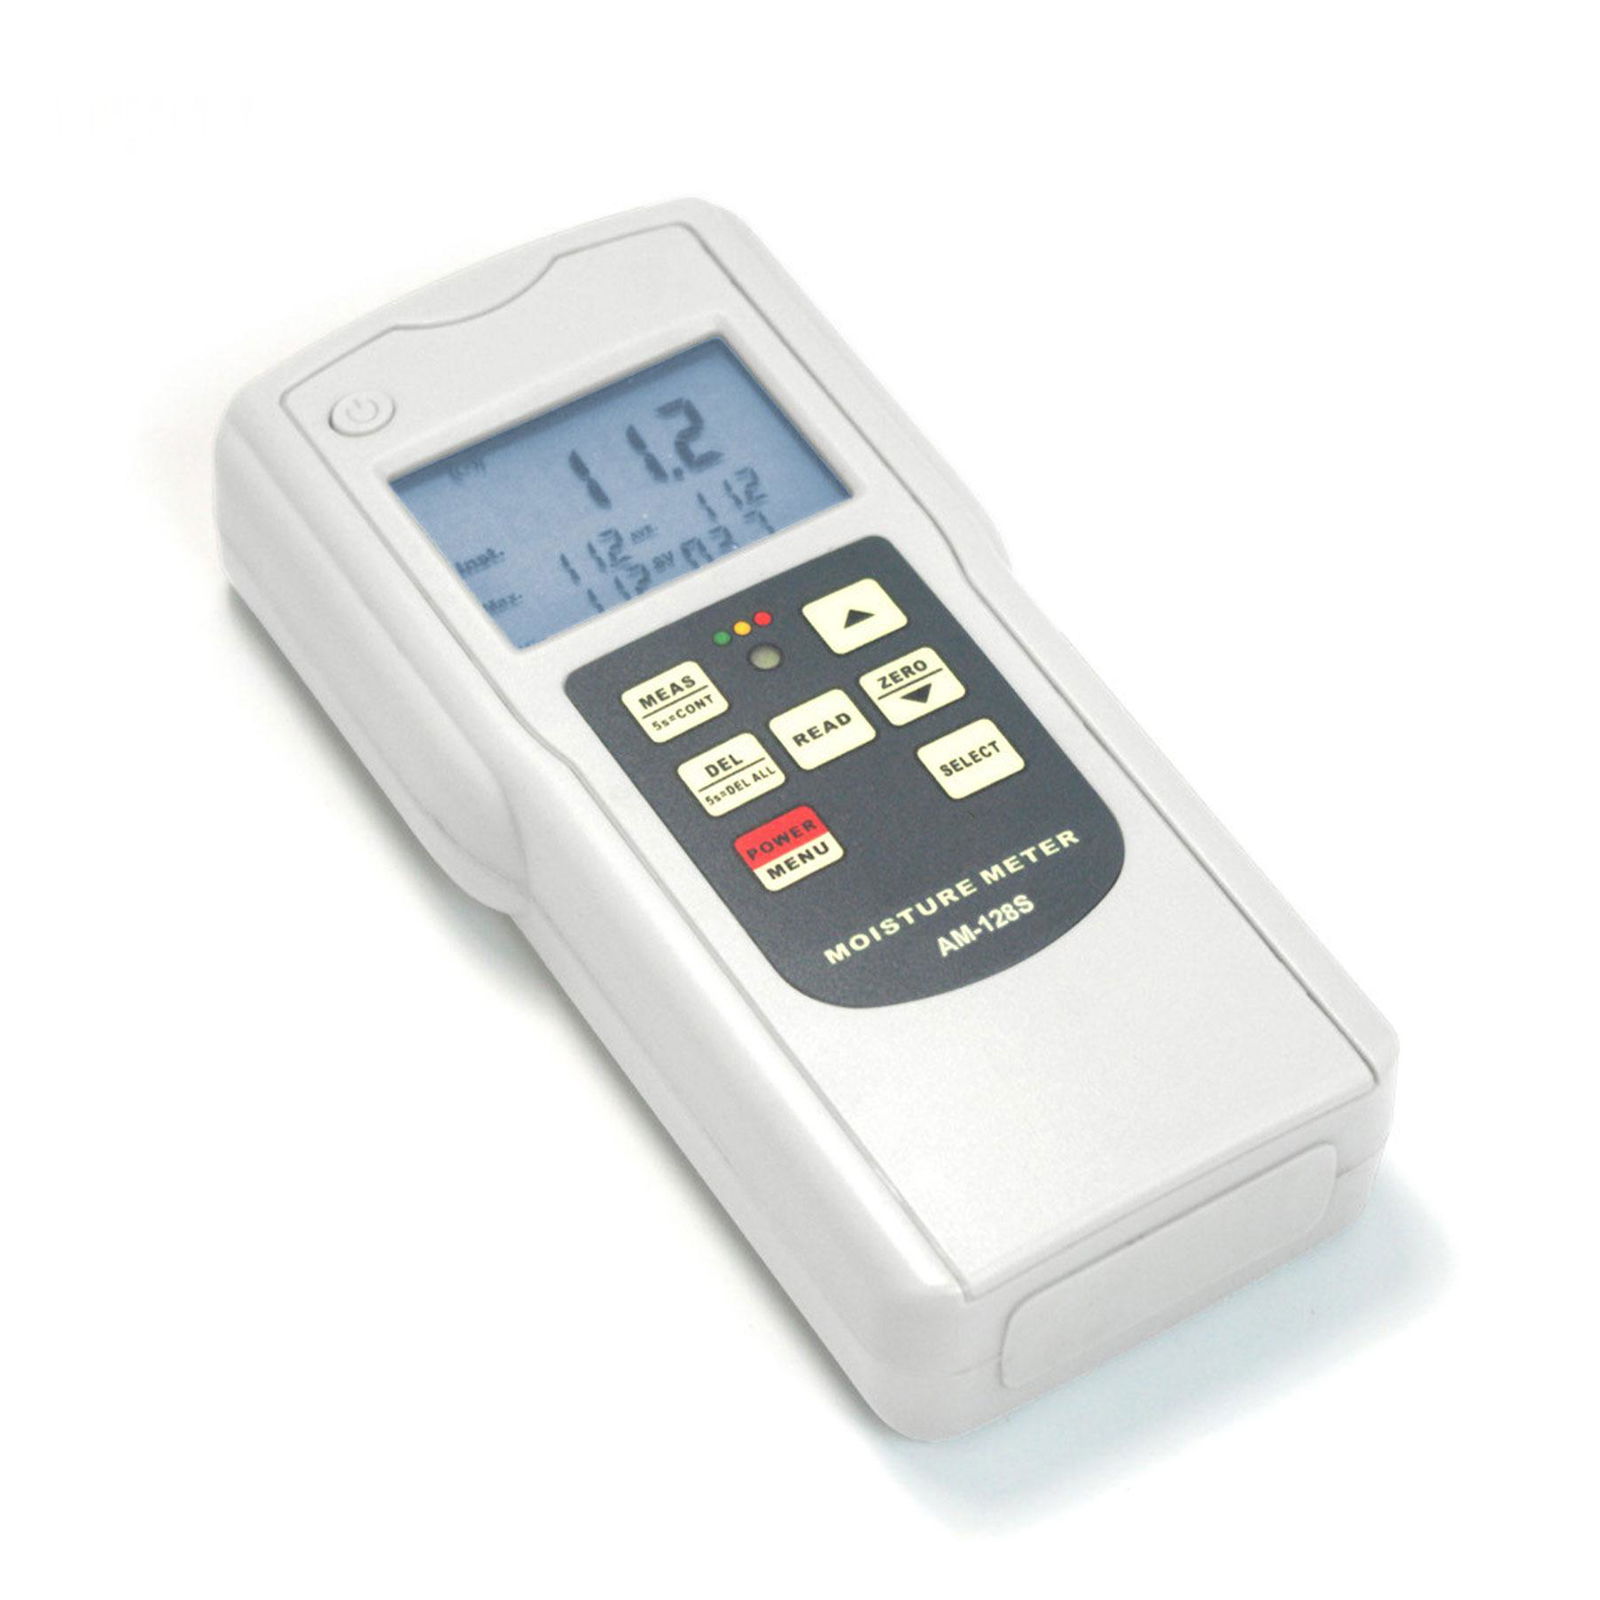 Multifunctional Moisture Meter AM-128S Humidity Meter Temperature measure 3